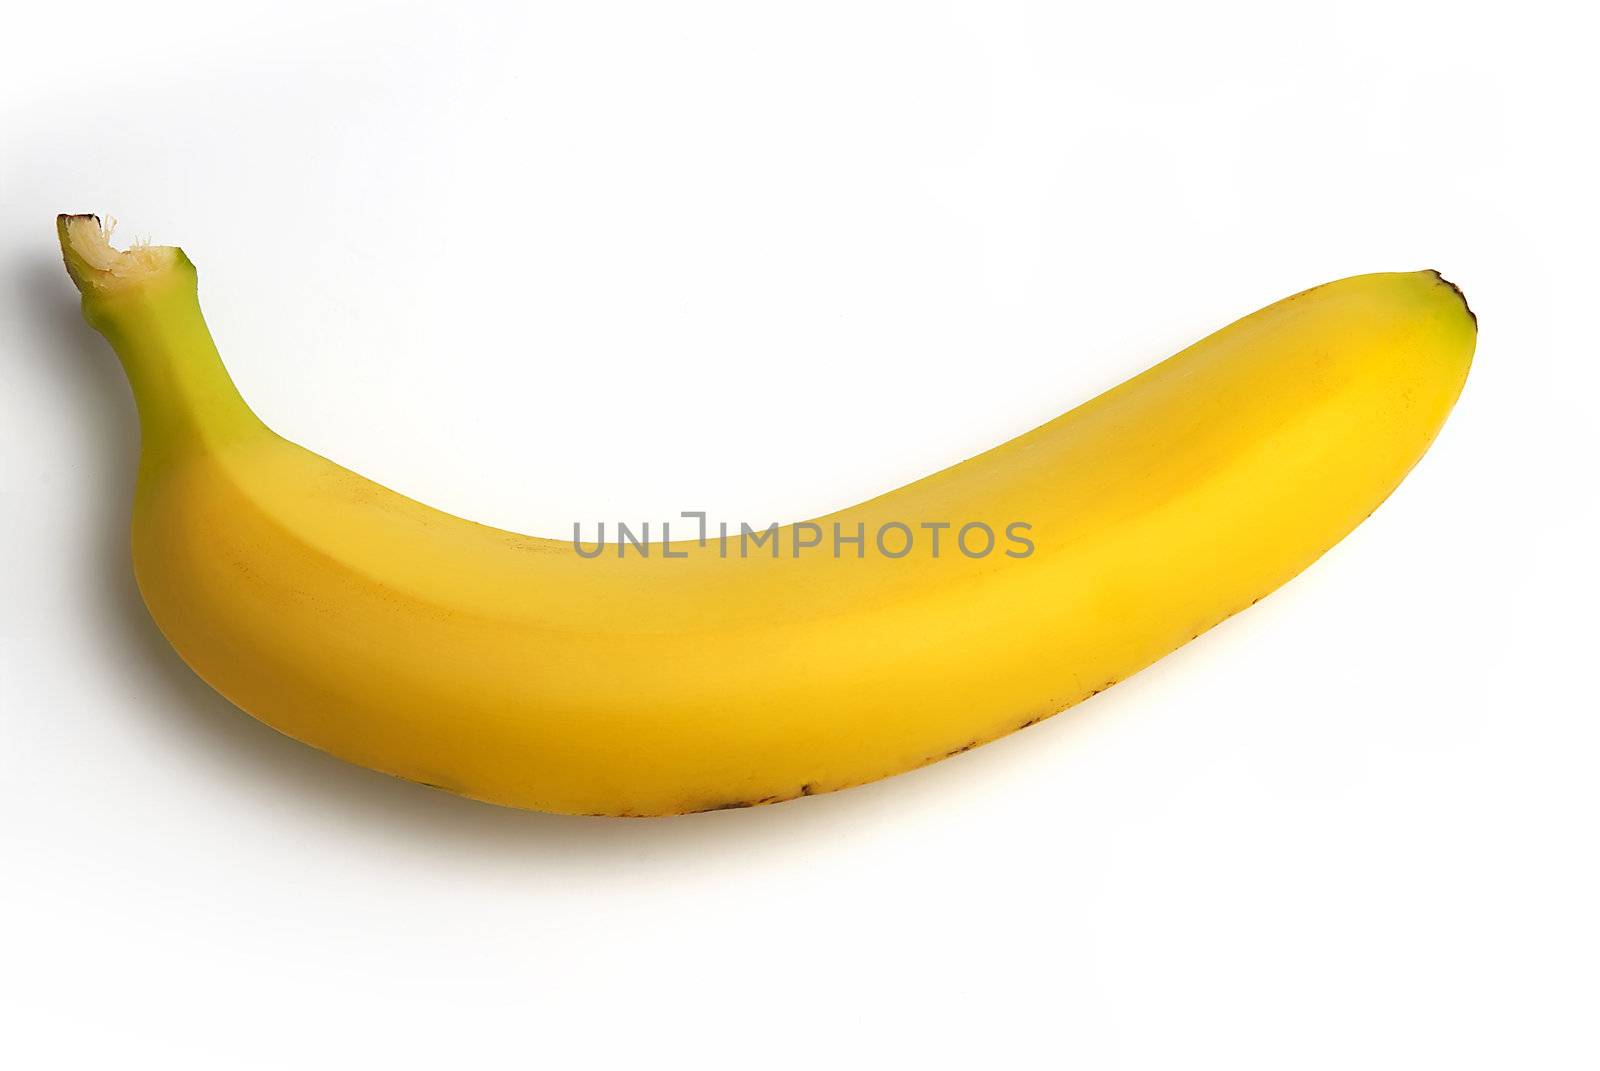 Banana by adamr